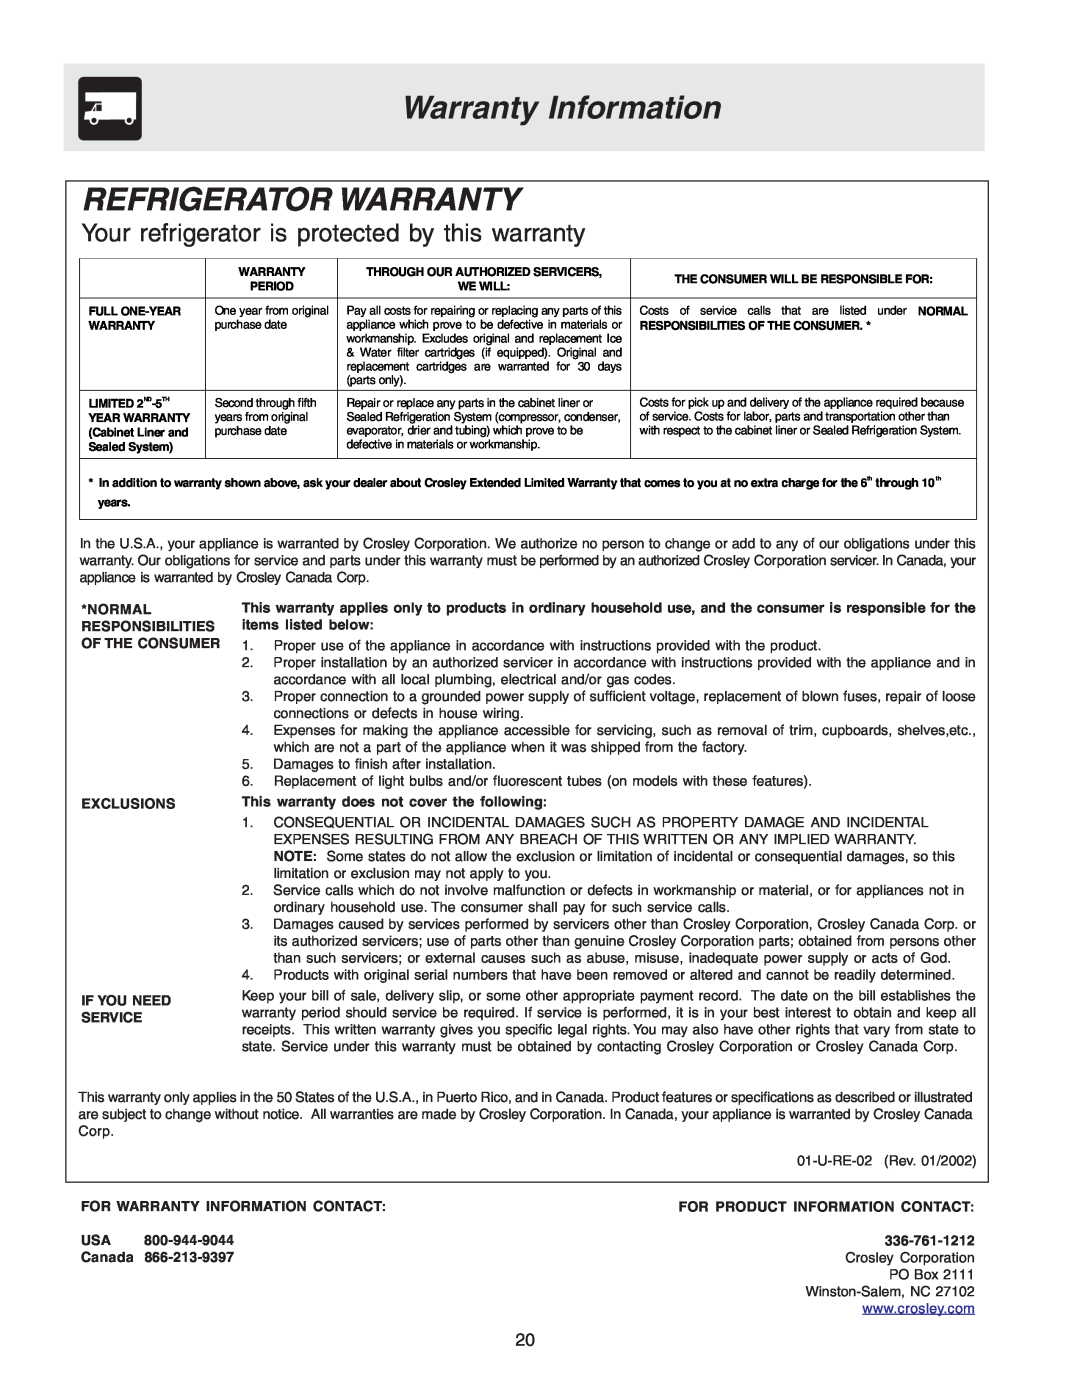 Crosley 241559900 manual Warranty Information, Refrigerator Warranty, Your refrigerator is protected by this warranty 